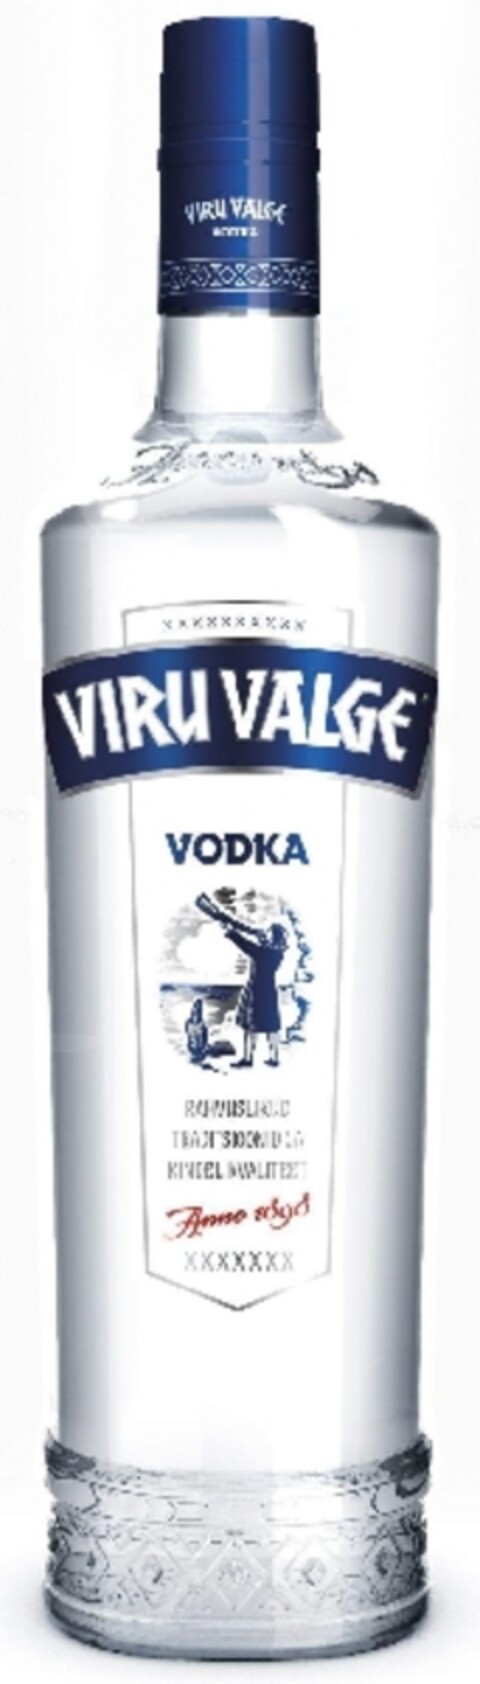 VIRU VALGE Logo (EUIPO, 18.11.2009)